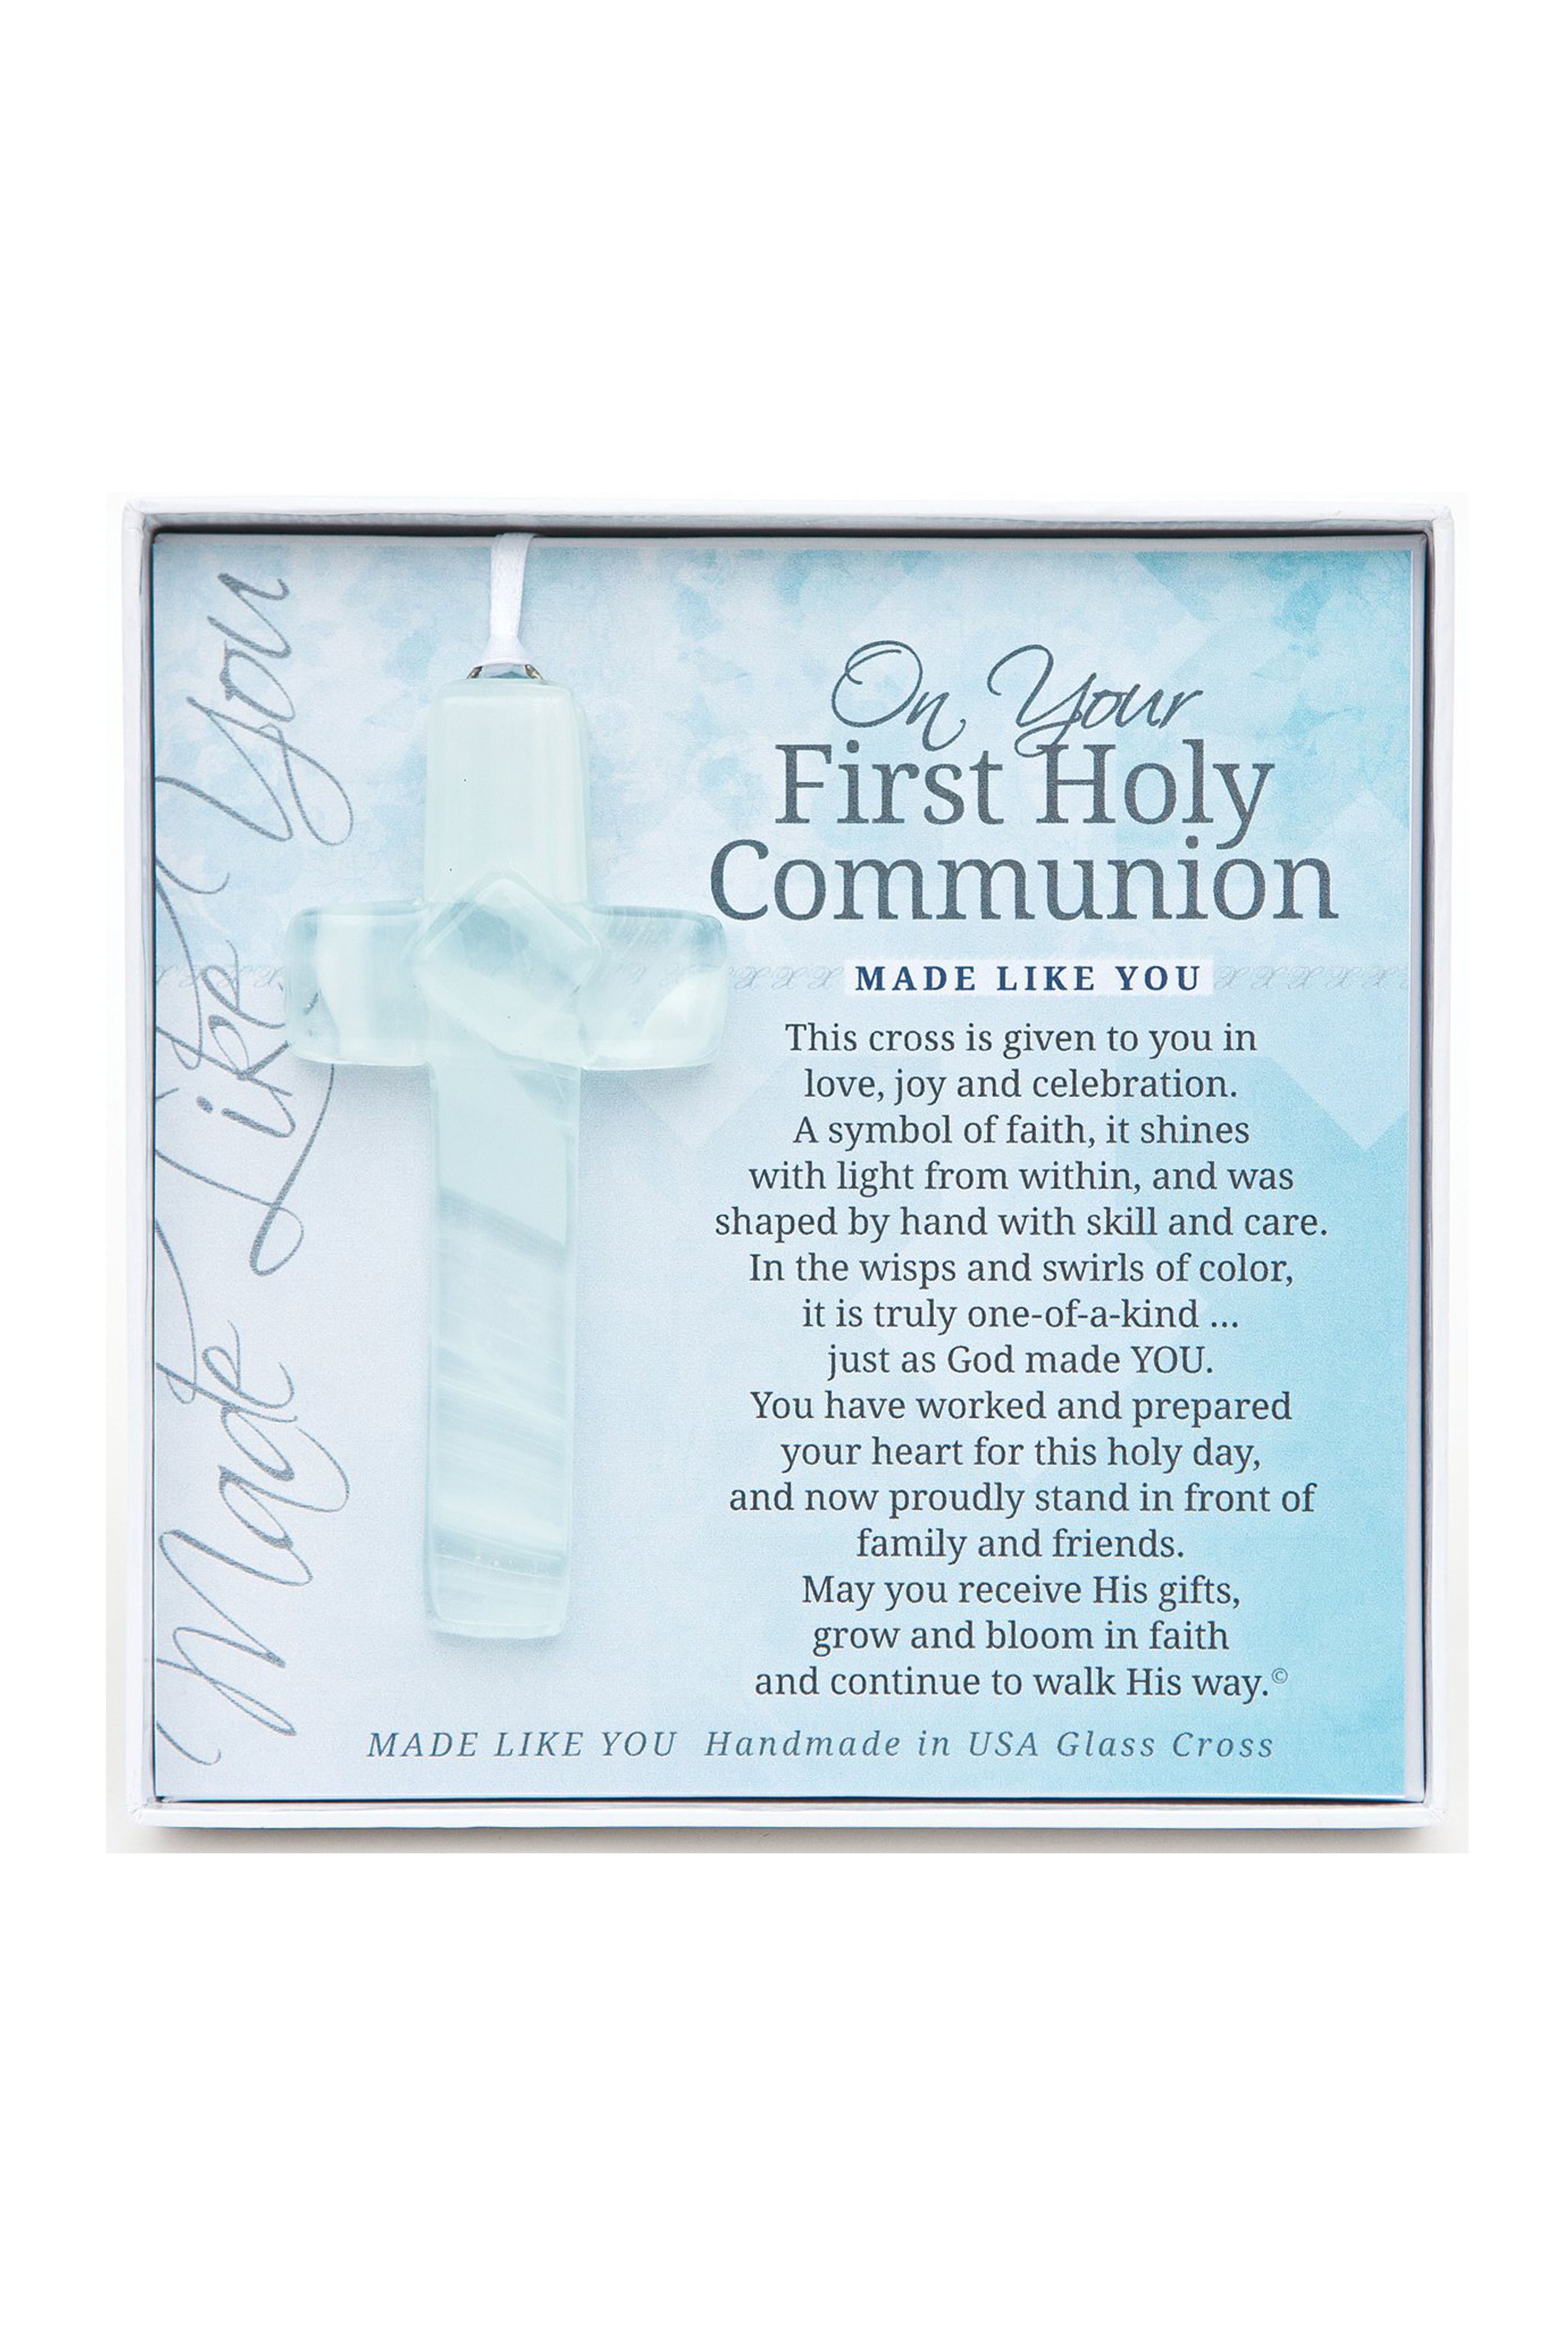 First Communion Ornament Catholic First Communion Gifts For Boys First Holy Communion Gifts For Girls 1st Communion Gifts For Girls